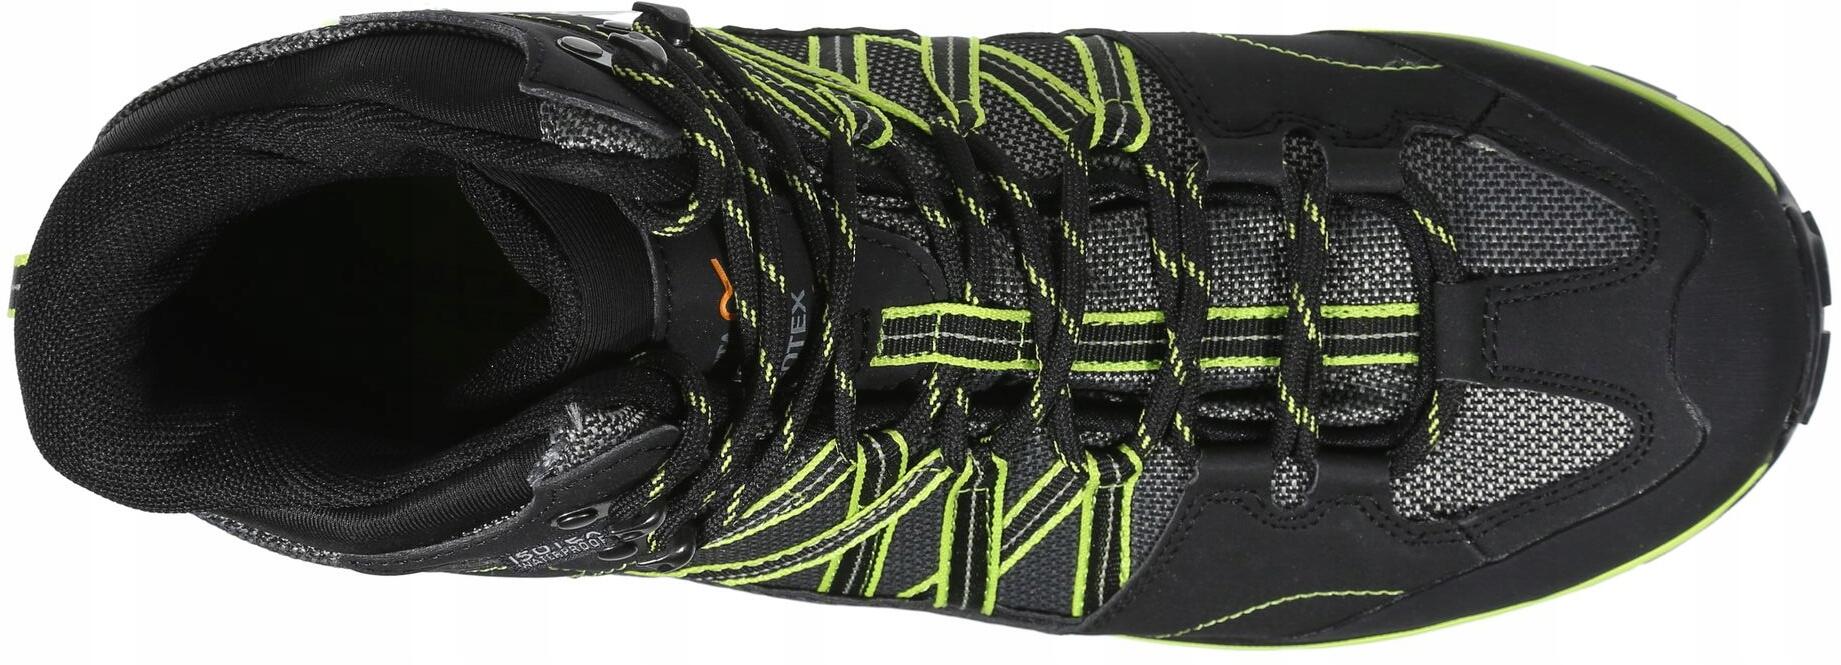 Samaris II Men's Hiking Boots - Black/Light Green 6/6